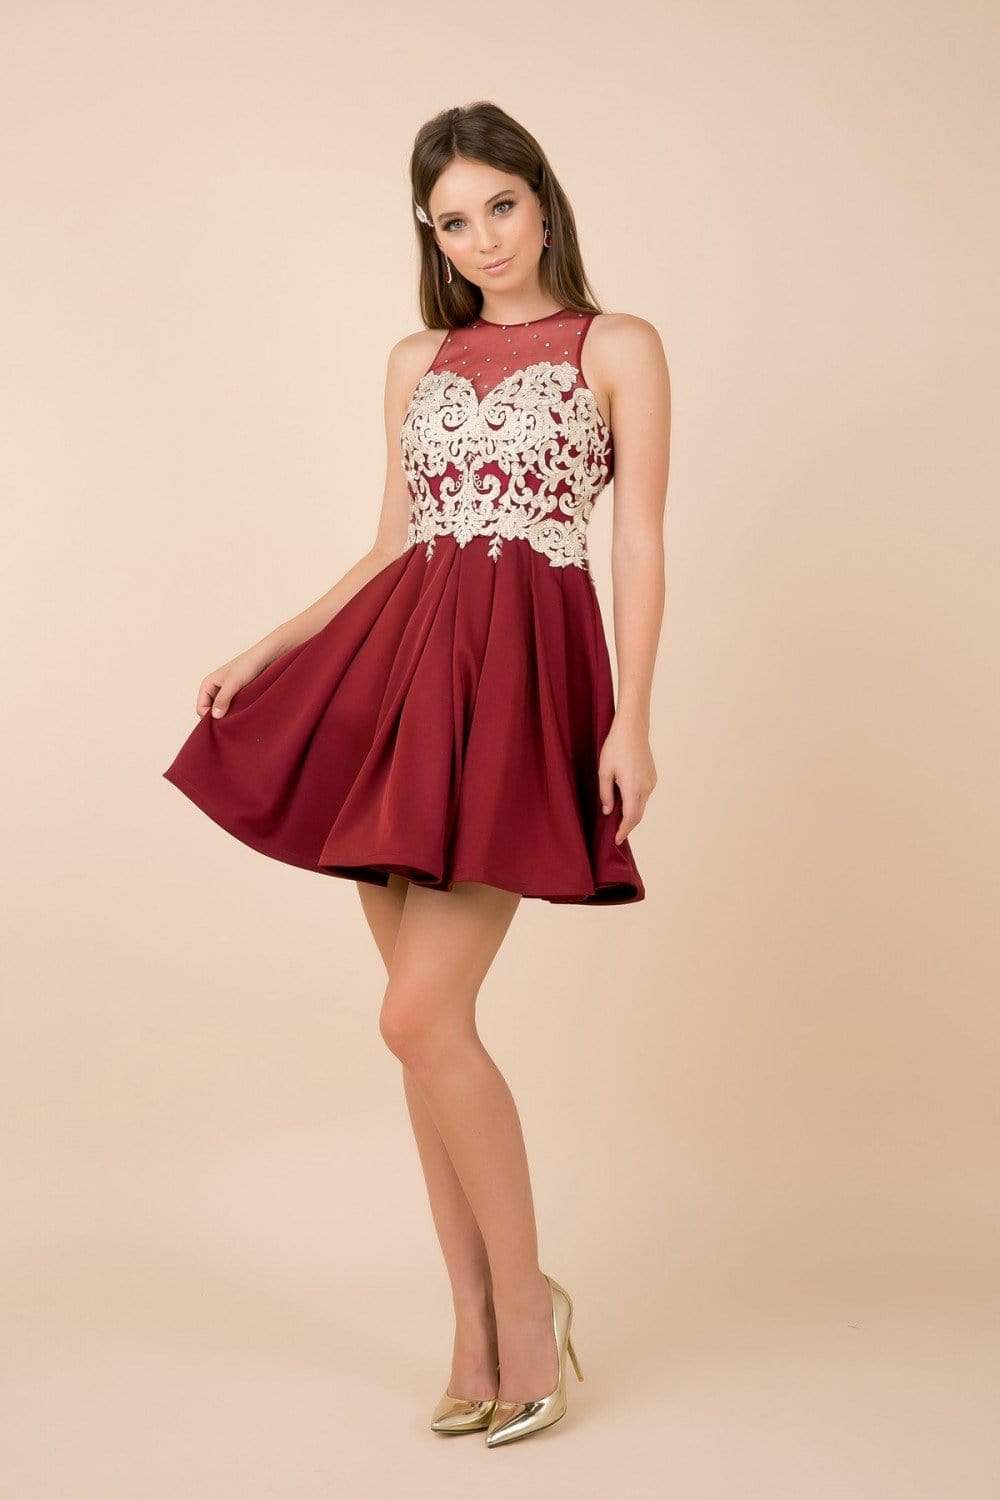 Nox Anabel - 6338 Metallic Appliqued Illusion Jewel A-Line Dress Homecoming Dresses XS / Burgundy